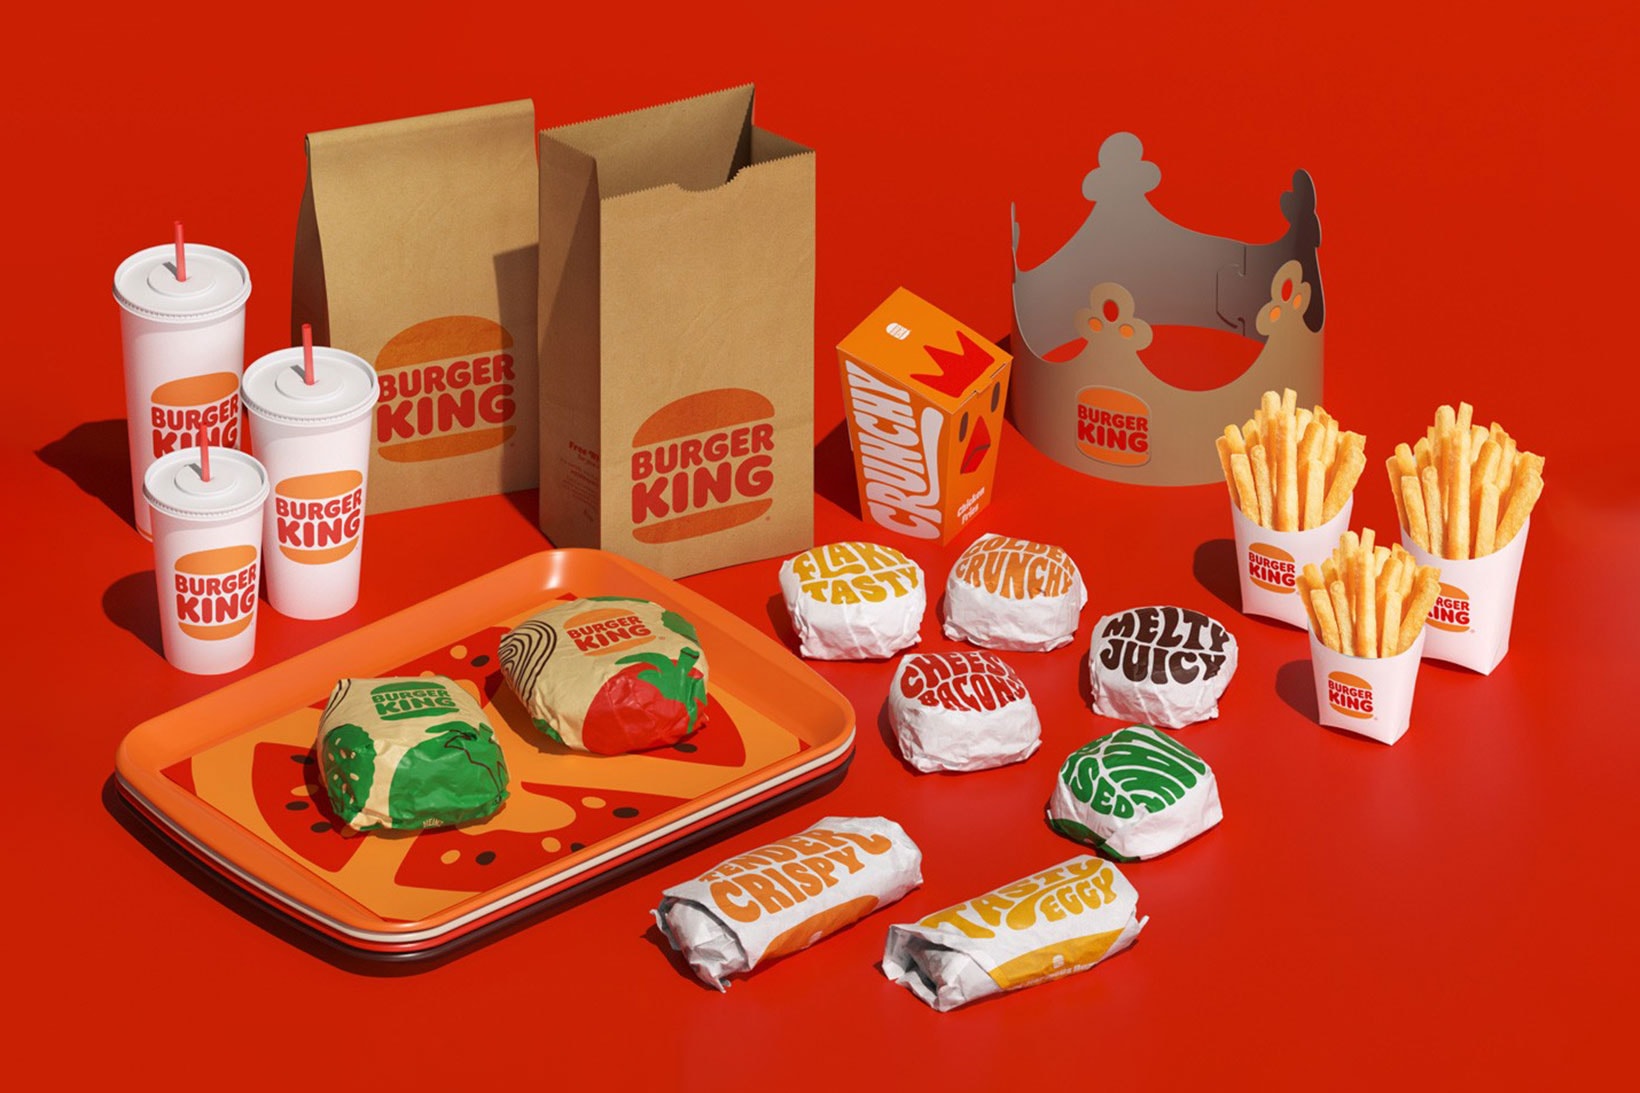 burger king rebrand new minimal design logo packaging fast food fries drinks trays paper bag